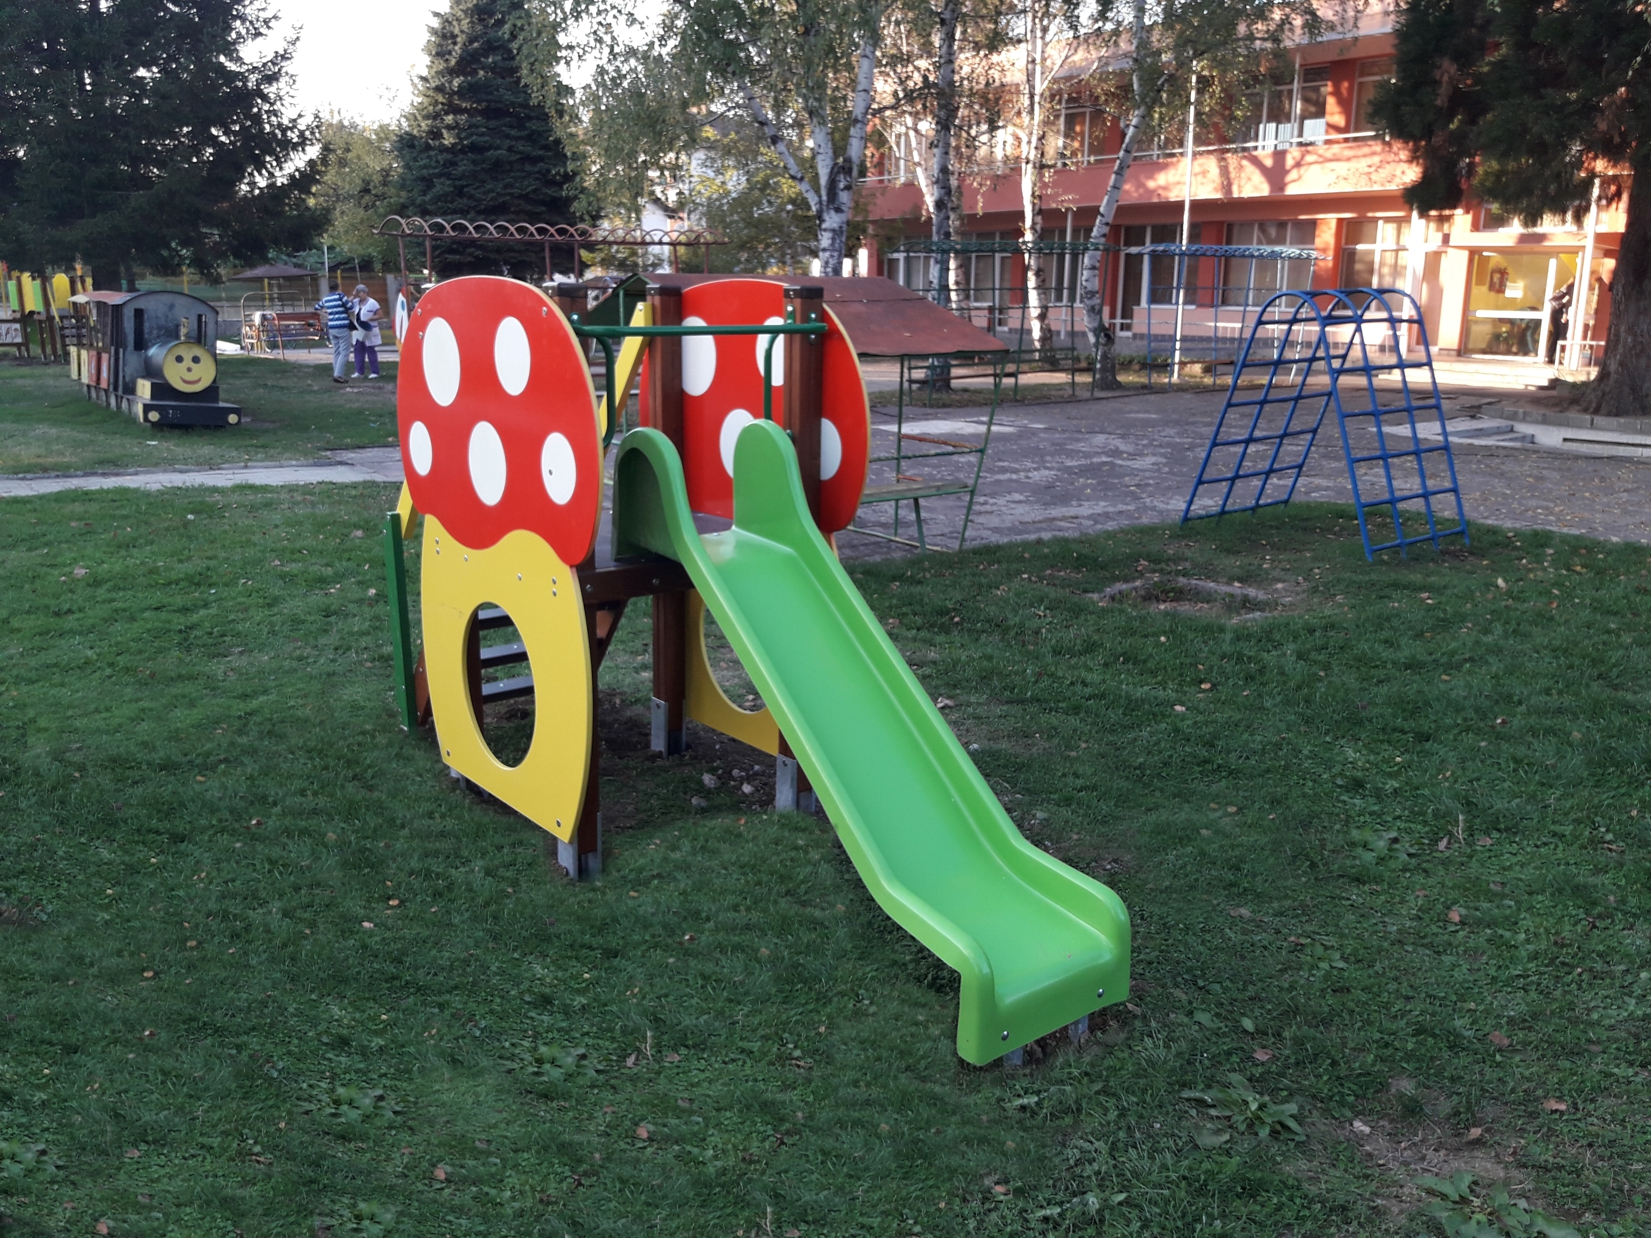 Combined playground equipment, model КД96 – Slide “Mushroom”